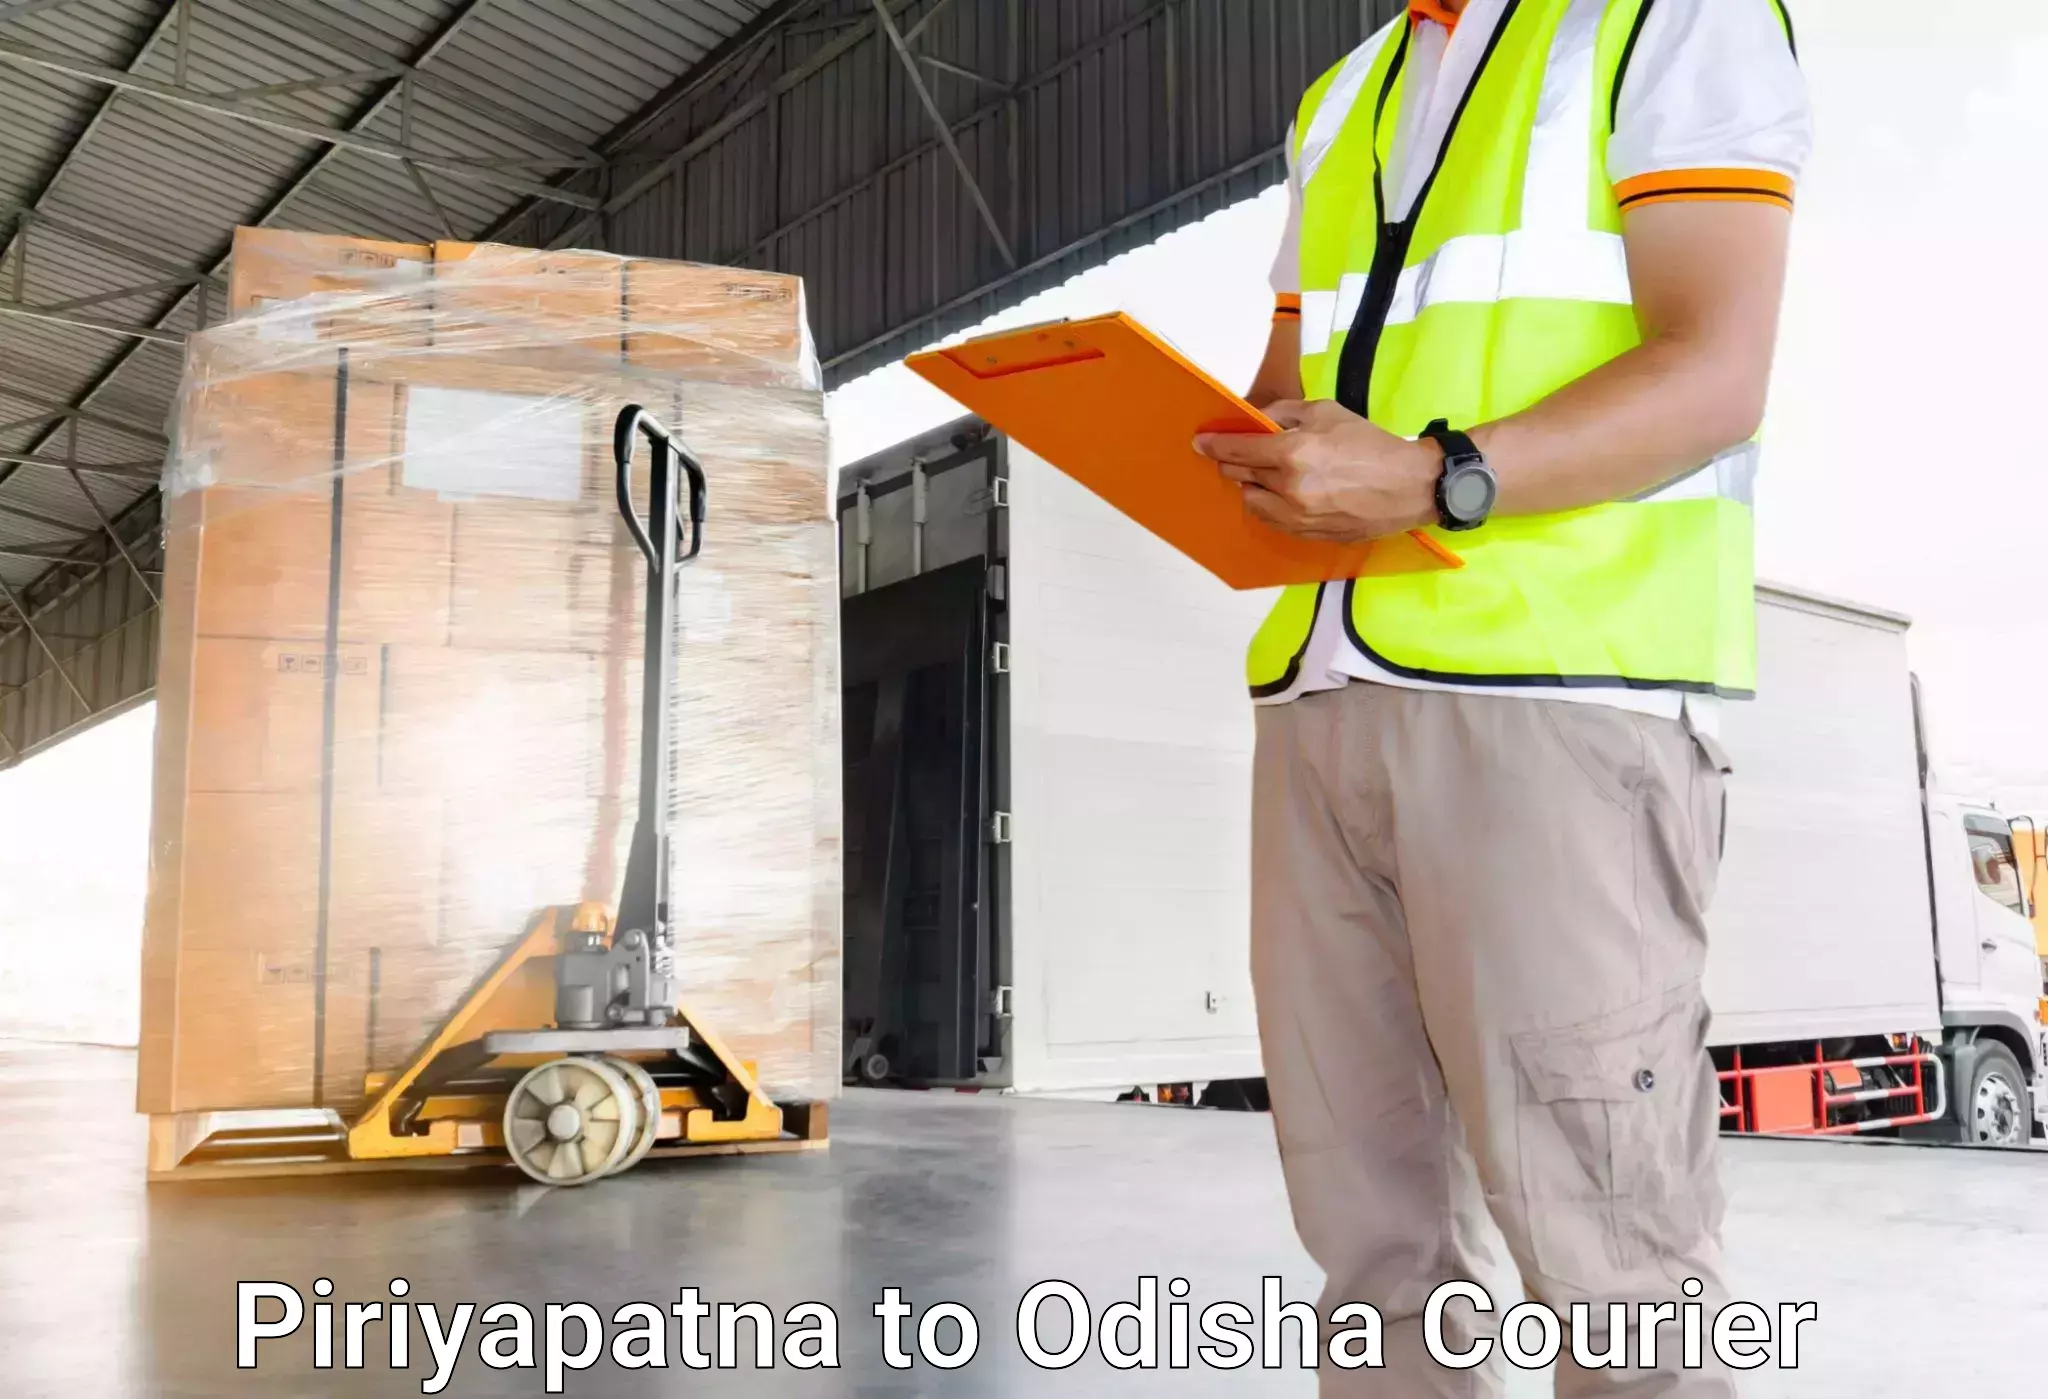 Luggage delivery app Piriyapatna to Bangriposi